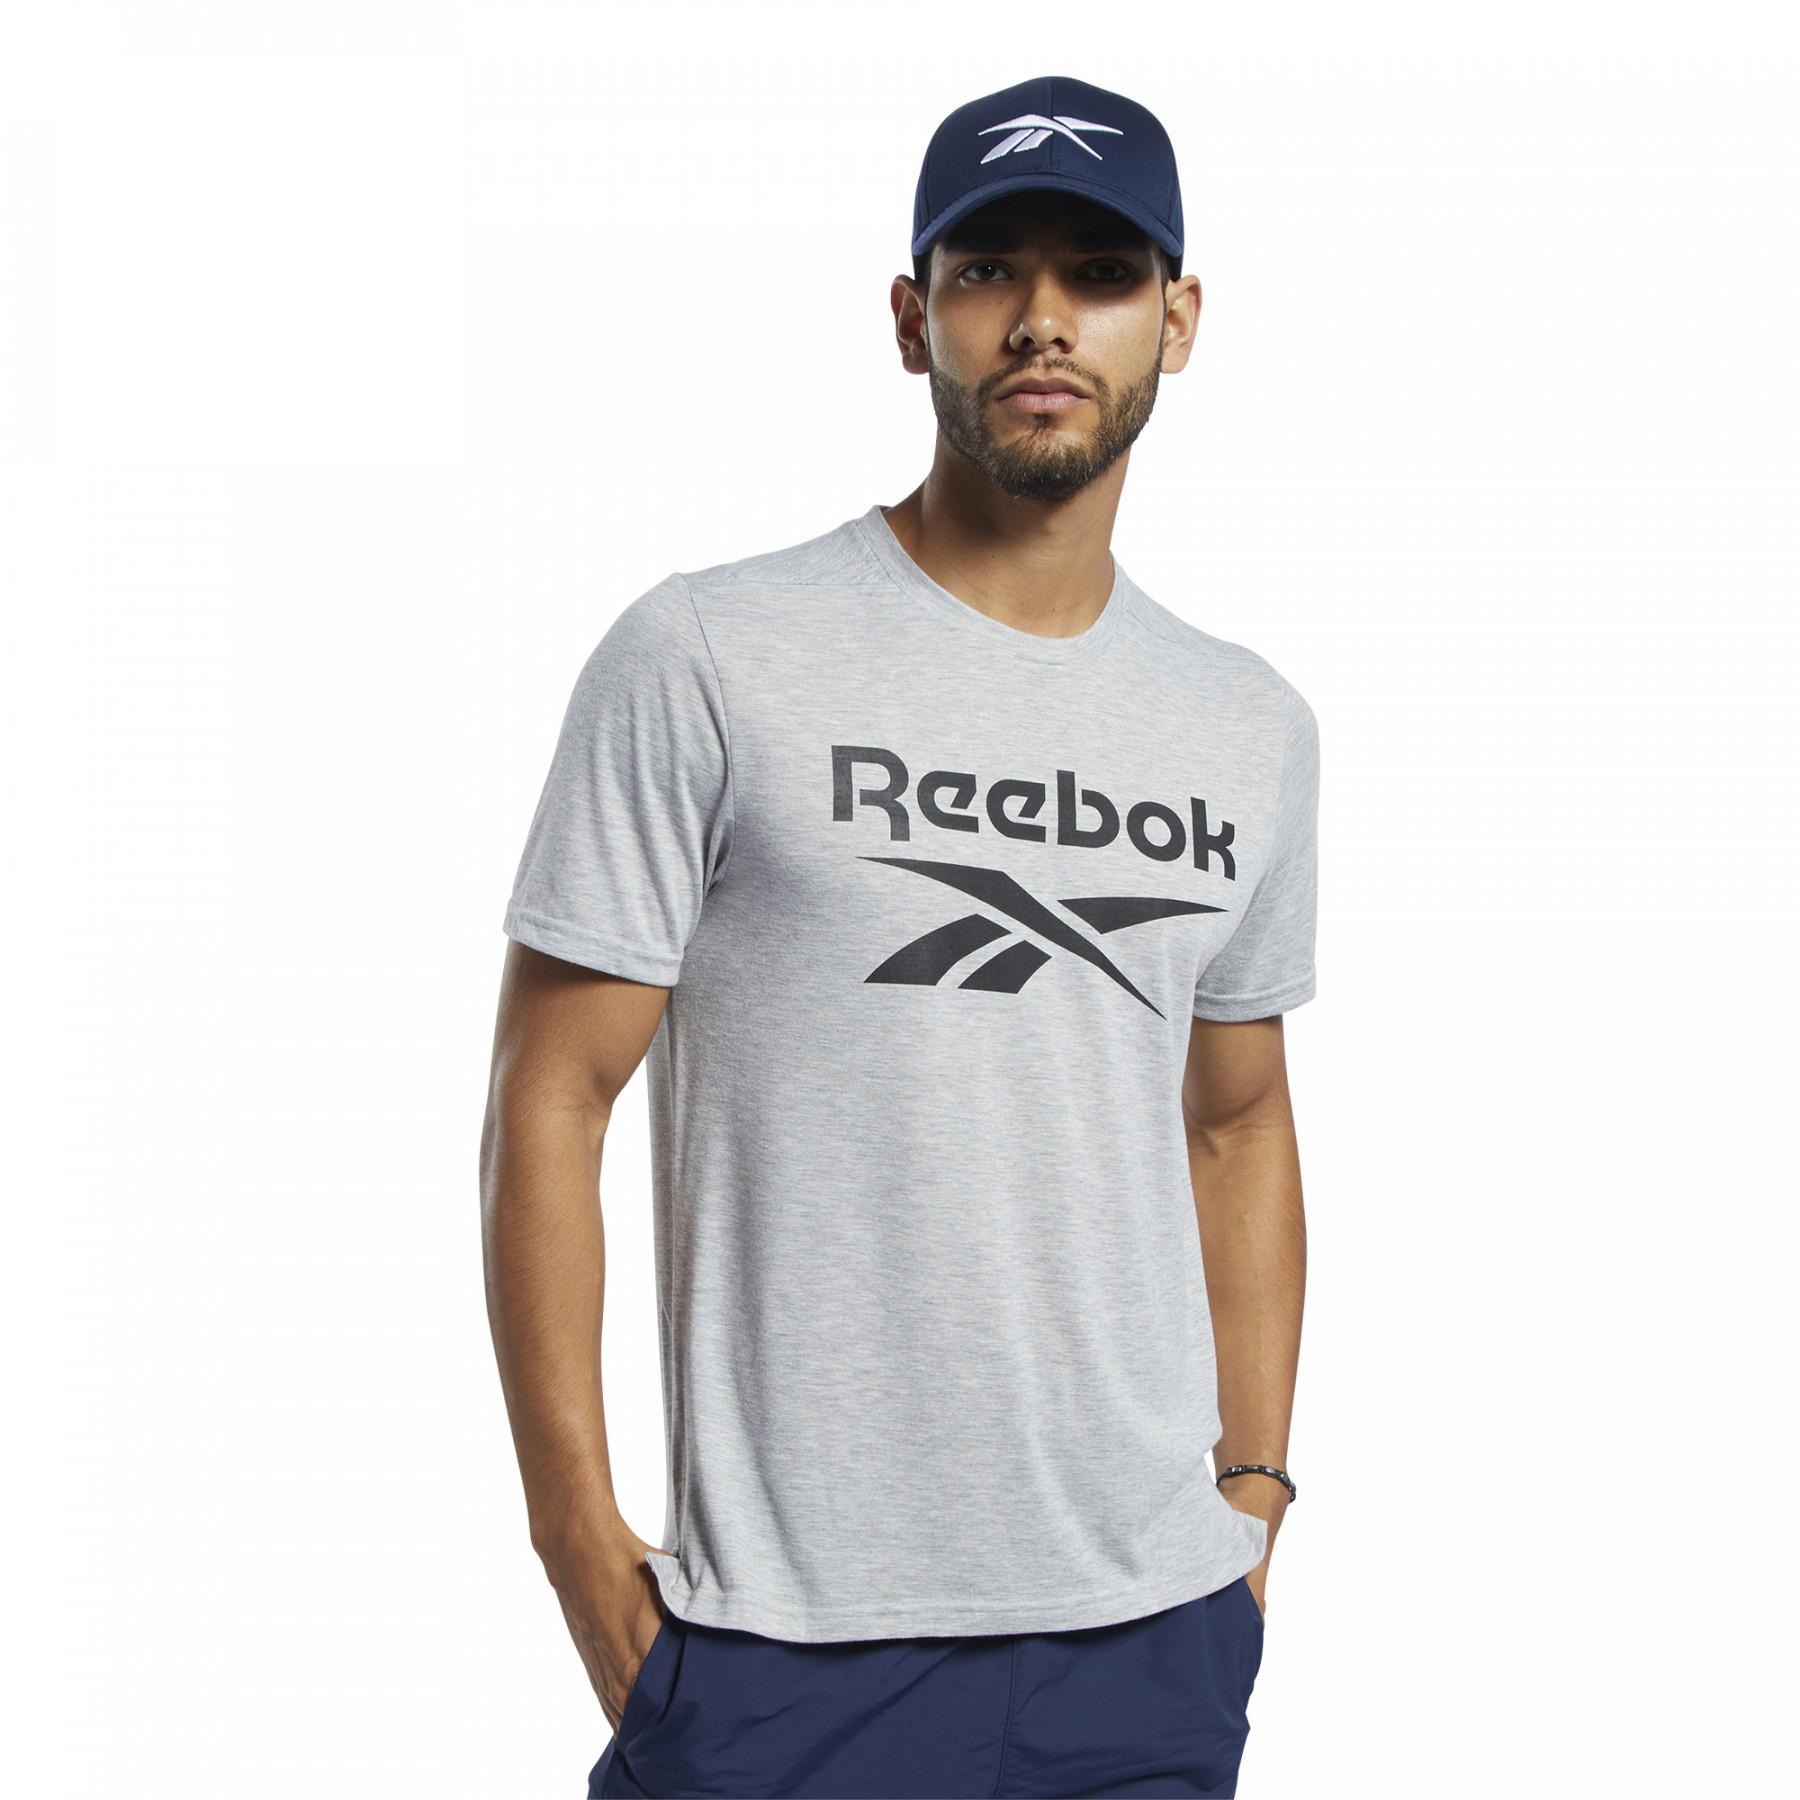 Camiseta Reebok Workout Ready Supremium Graphic